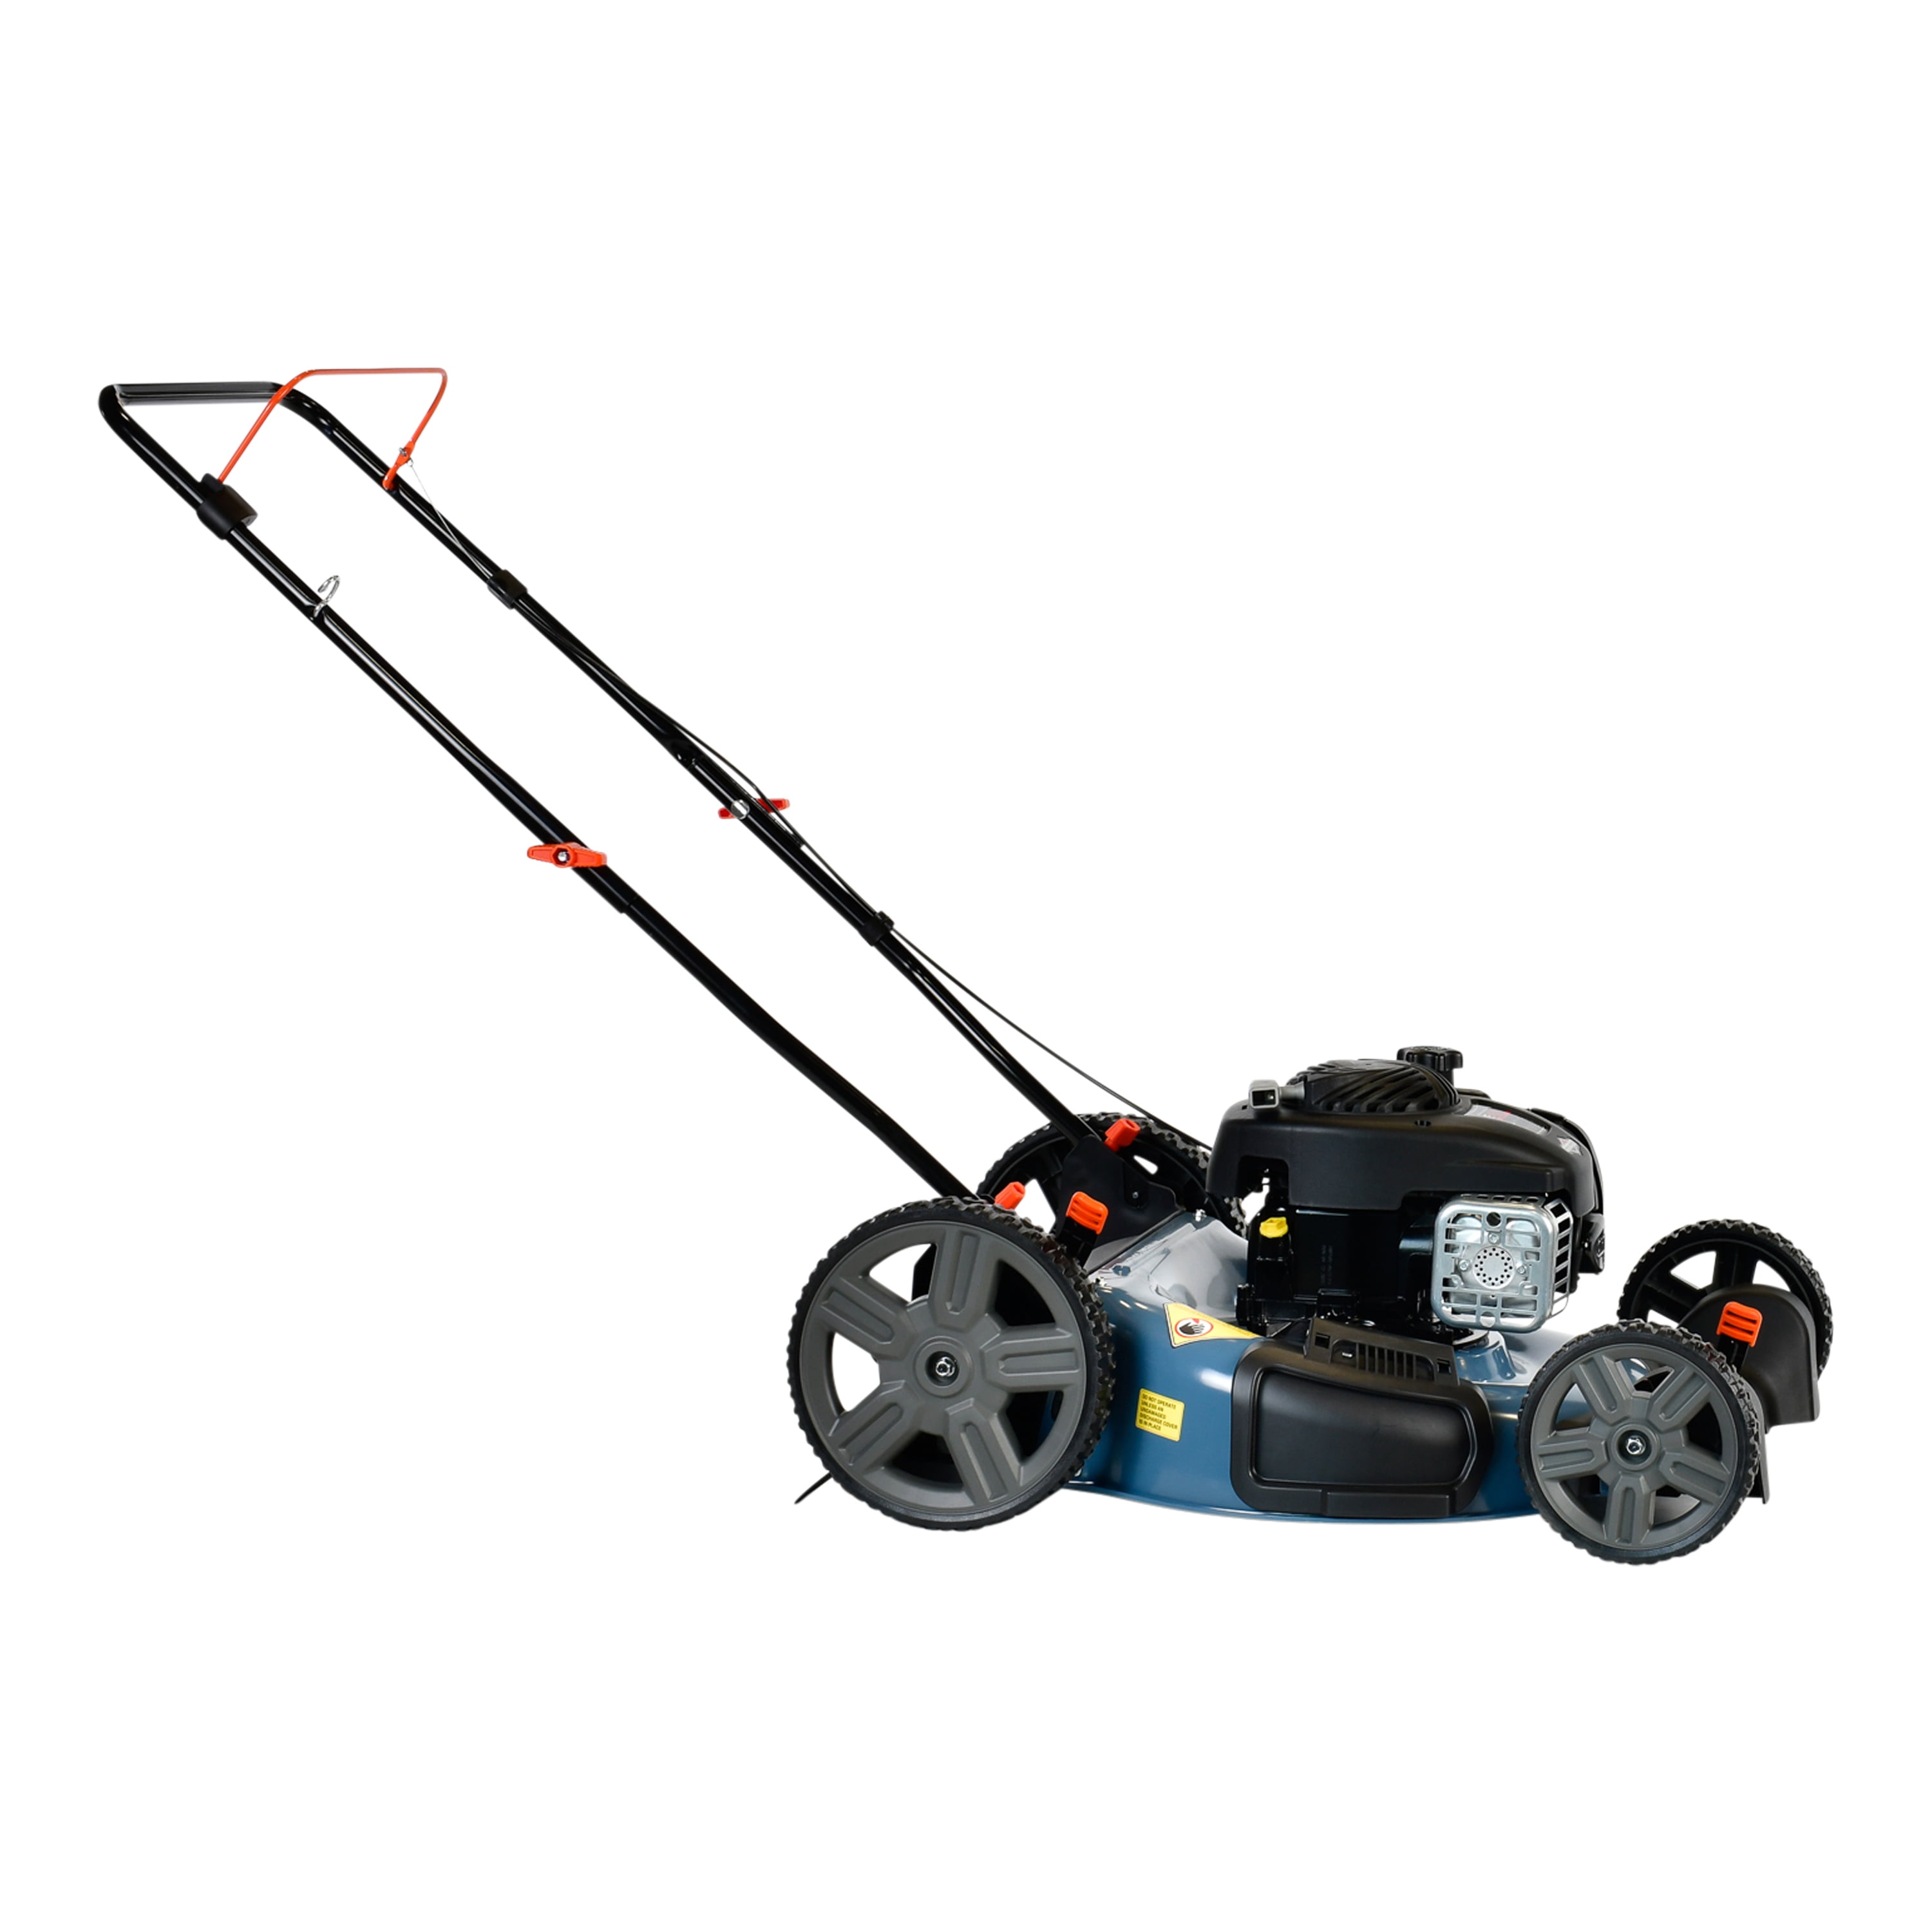  Senix Gas Push Lawn Mower, 21-Inch, 140 cc 4-Cycle